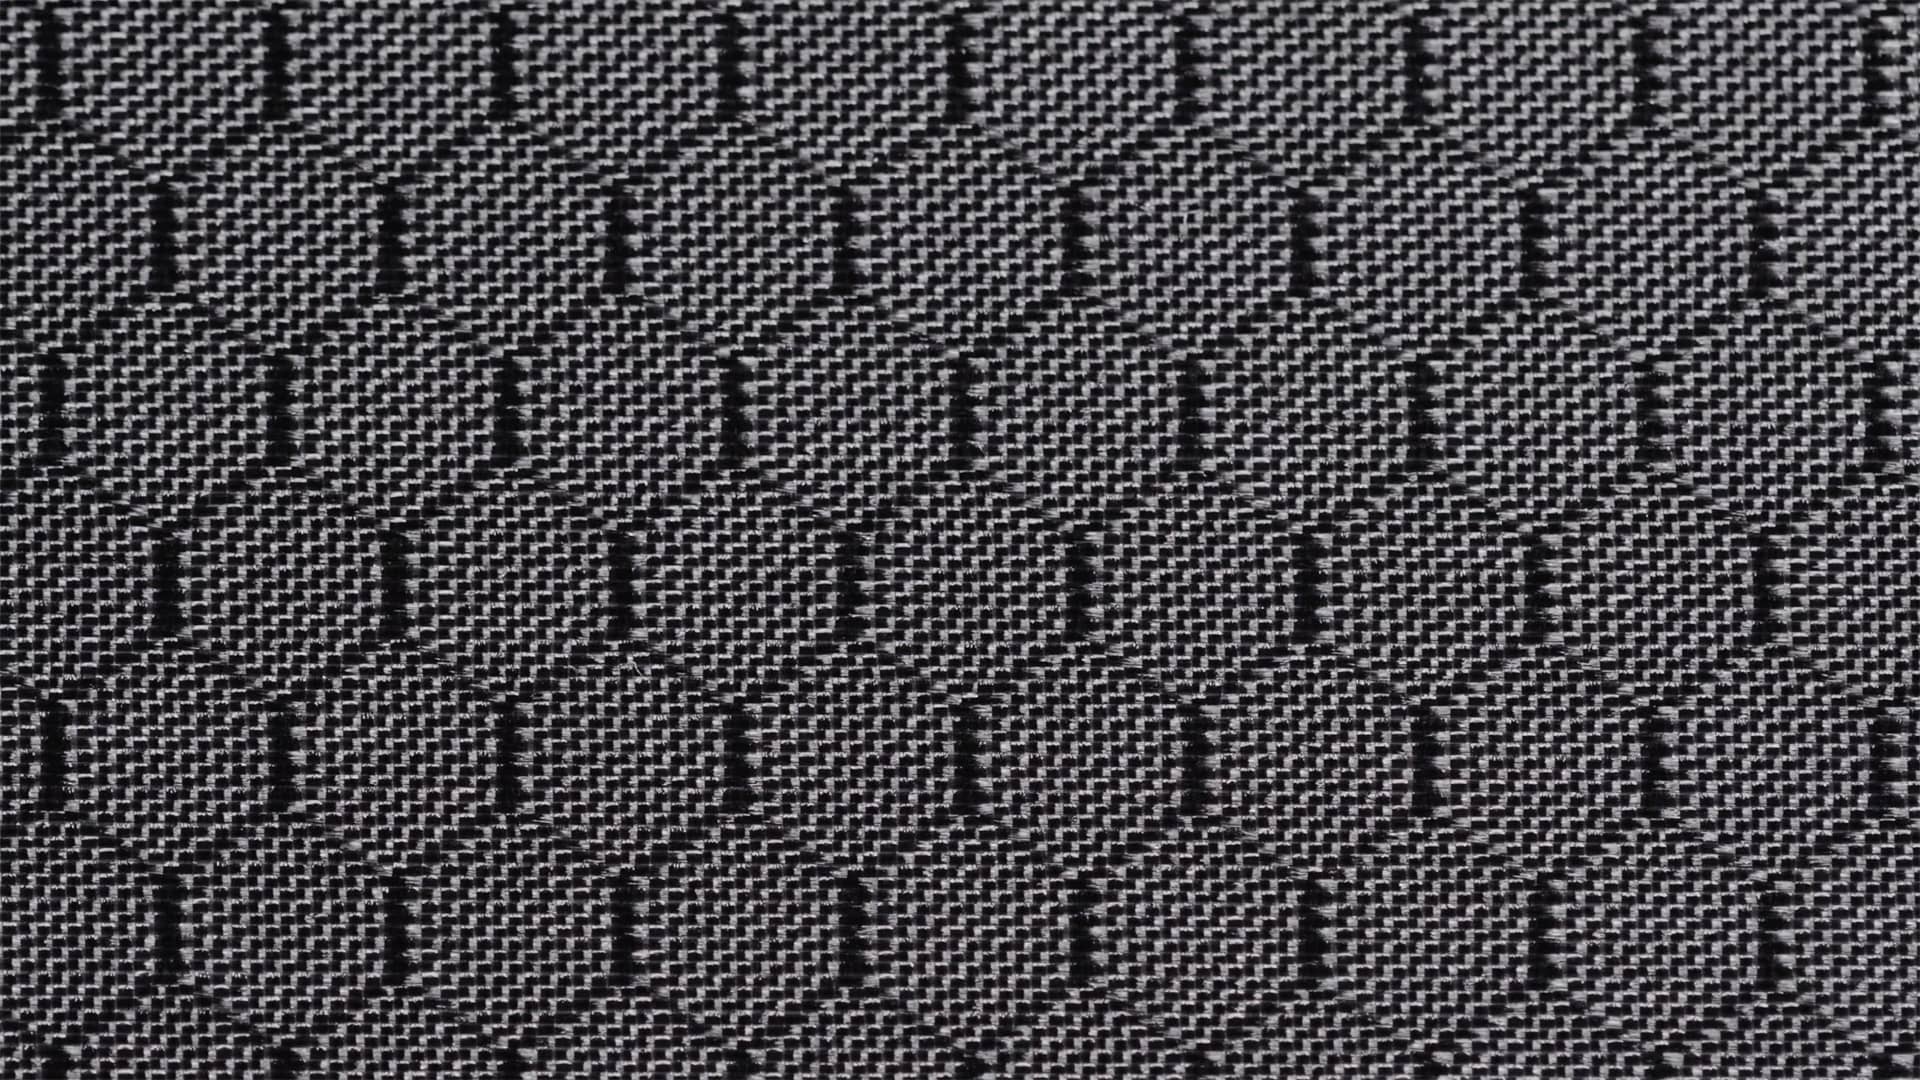 CORDURA® - Ballistic Fabric